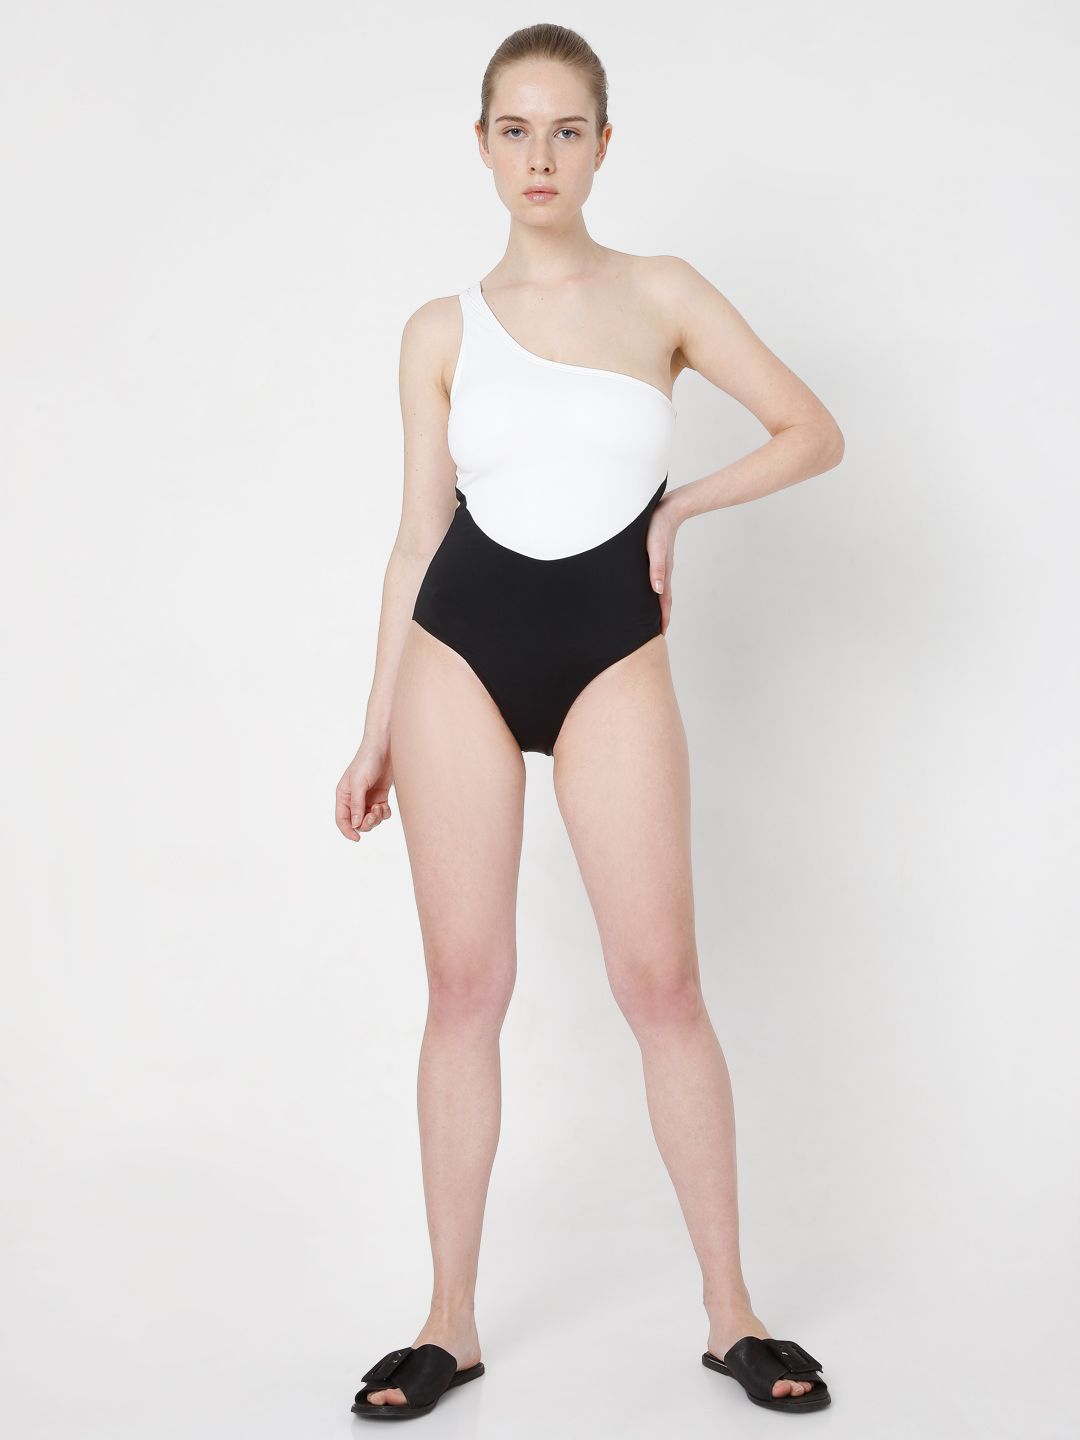 Vero Moda White & Black Colourblocked Swimsuit Price in India